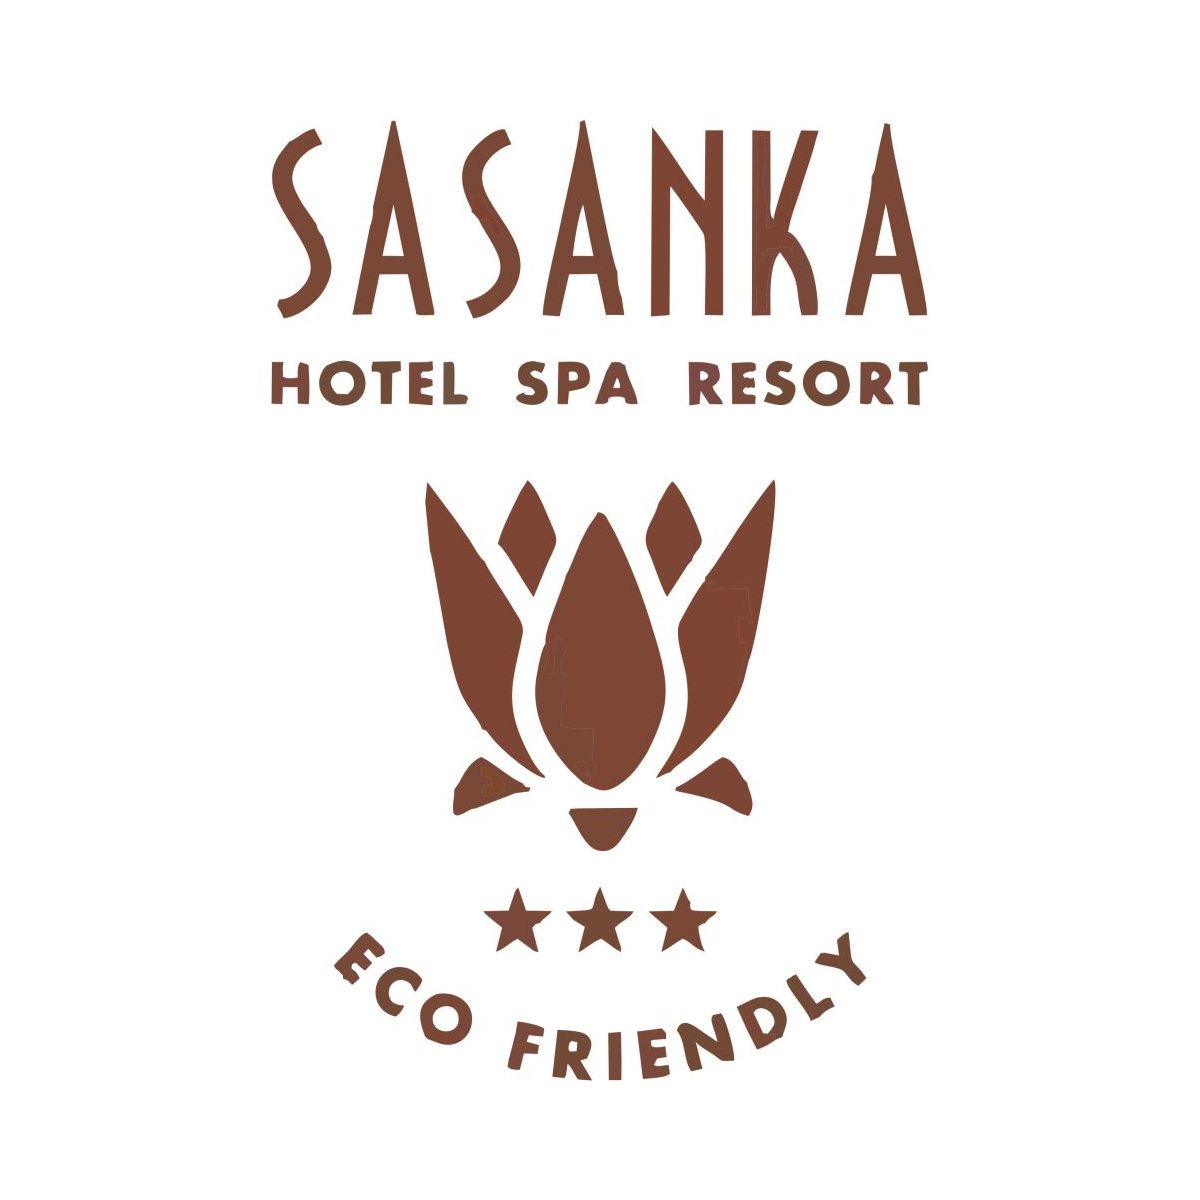 Sasanka Hotel Spa Resort